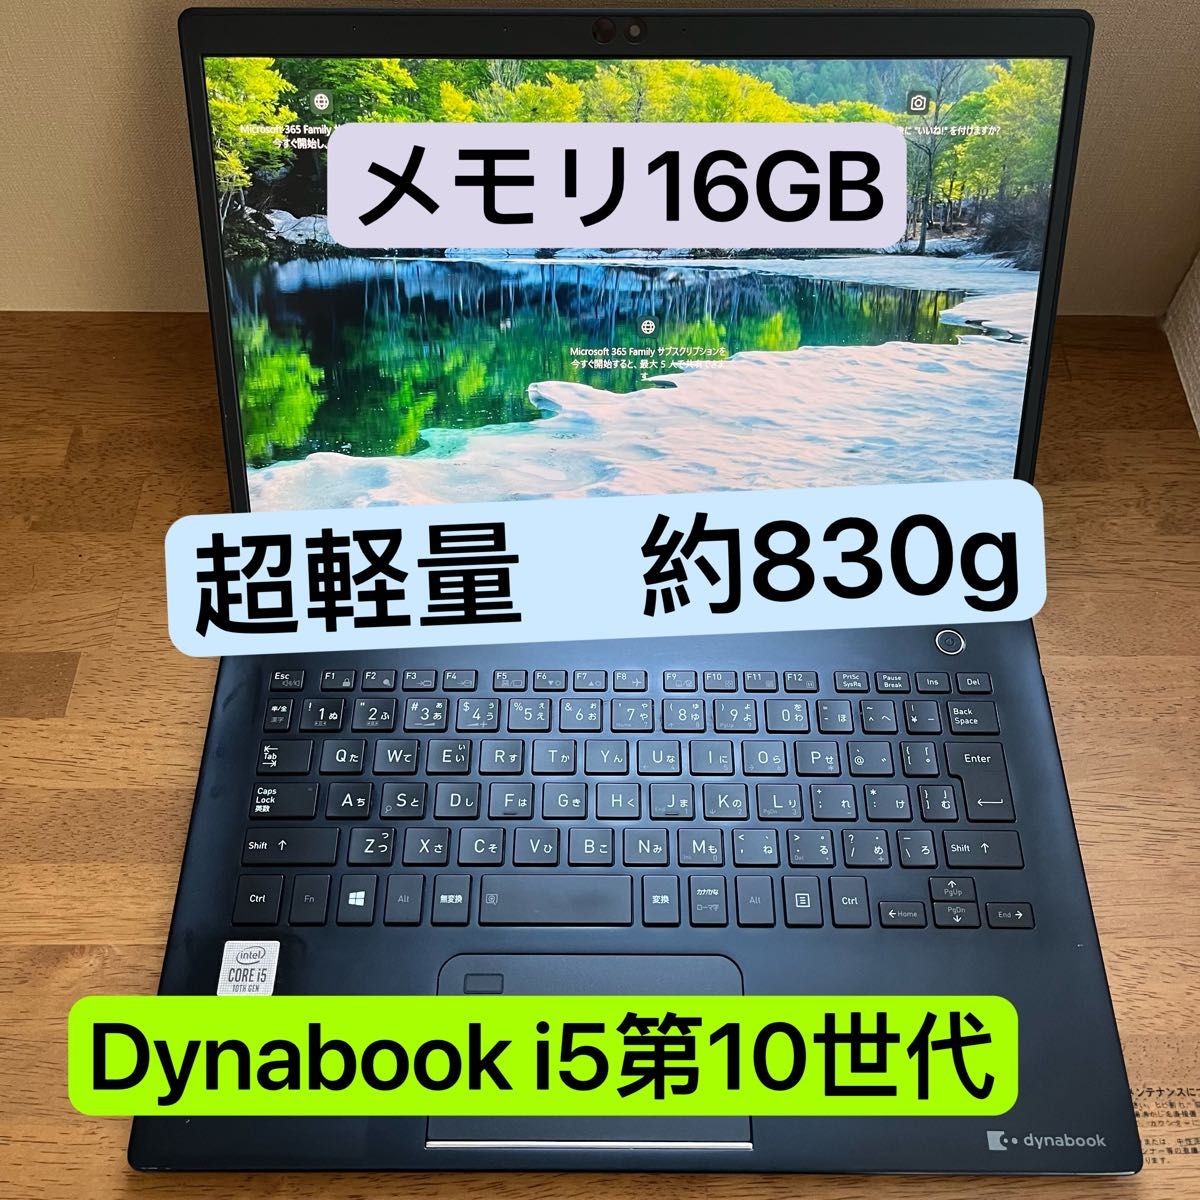 Toshiba dynabook G83/FP i5第10世代 16Gb 超軽量ノートPC 